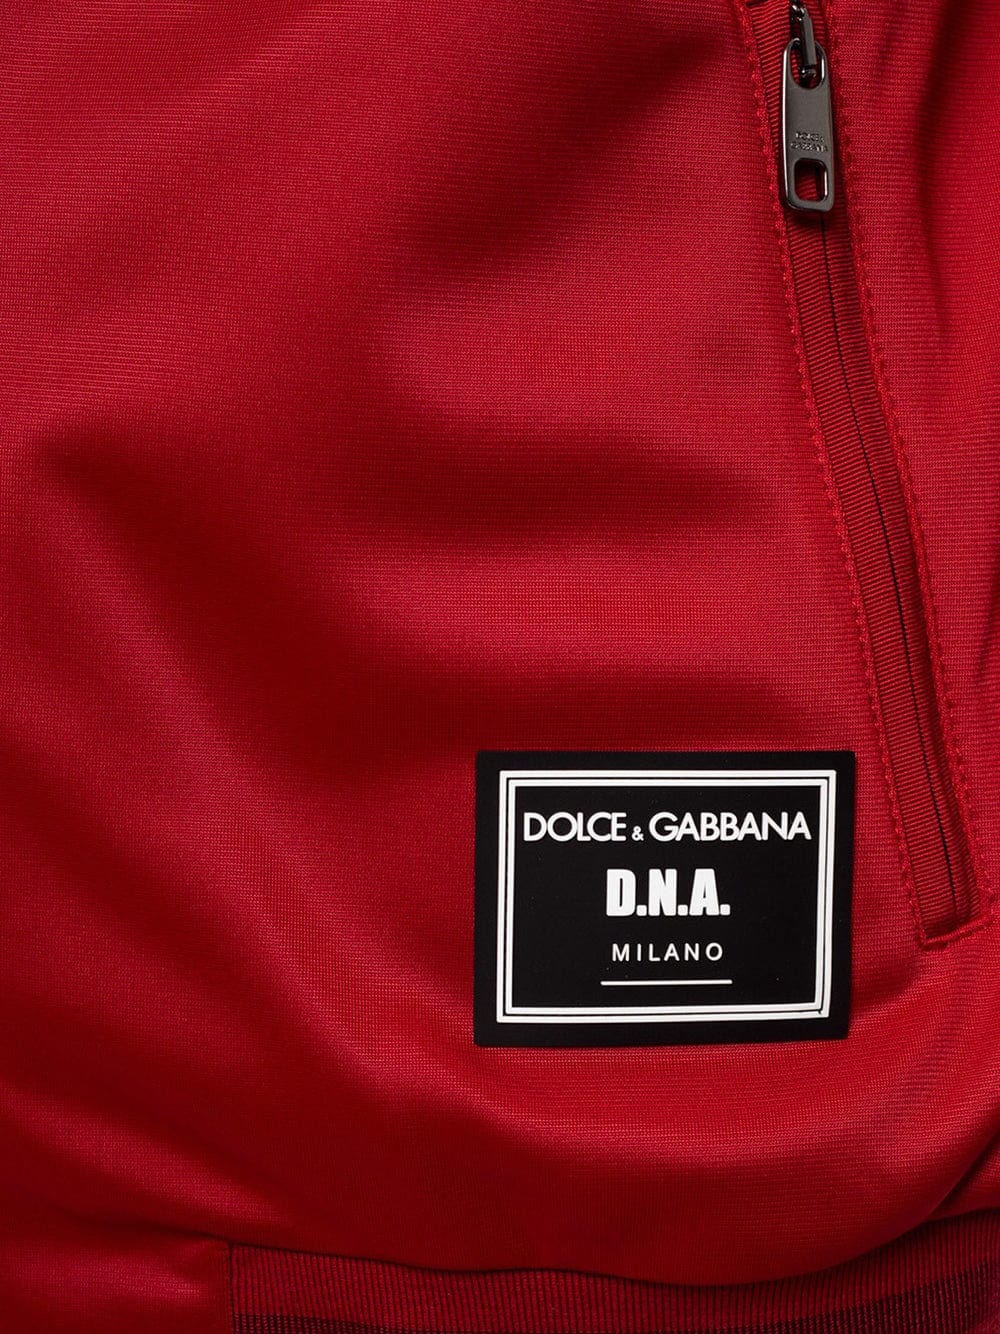 Dolce & Gabbana D.N.A Logo Patch Jacket